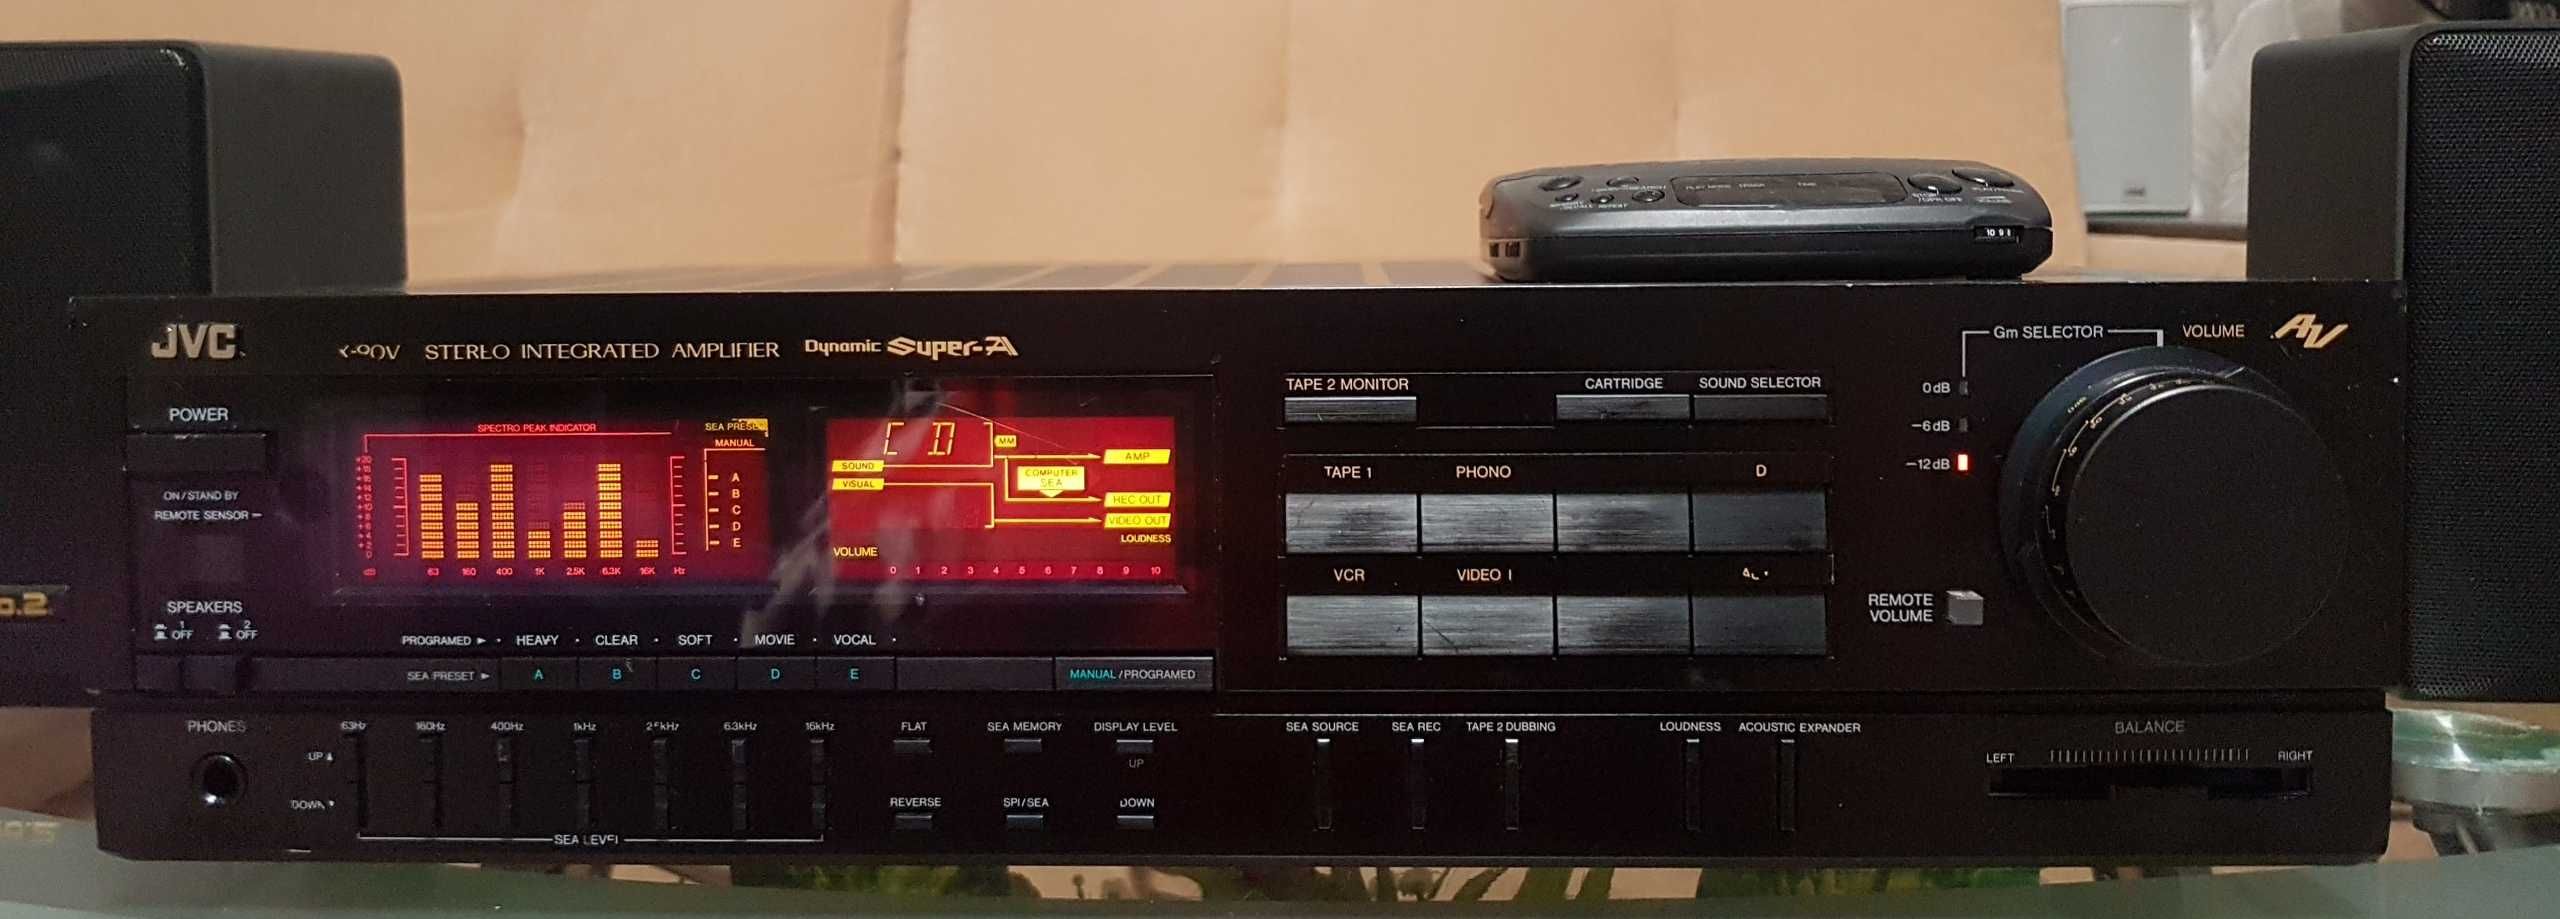 Усилитель JVC AX-90 V stereo Integrated amplifier made in Japan